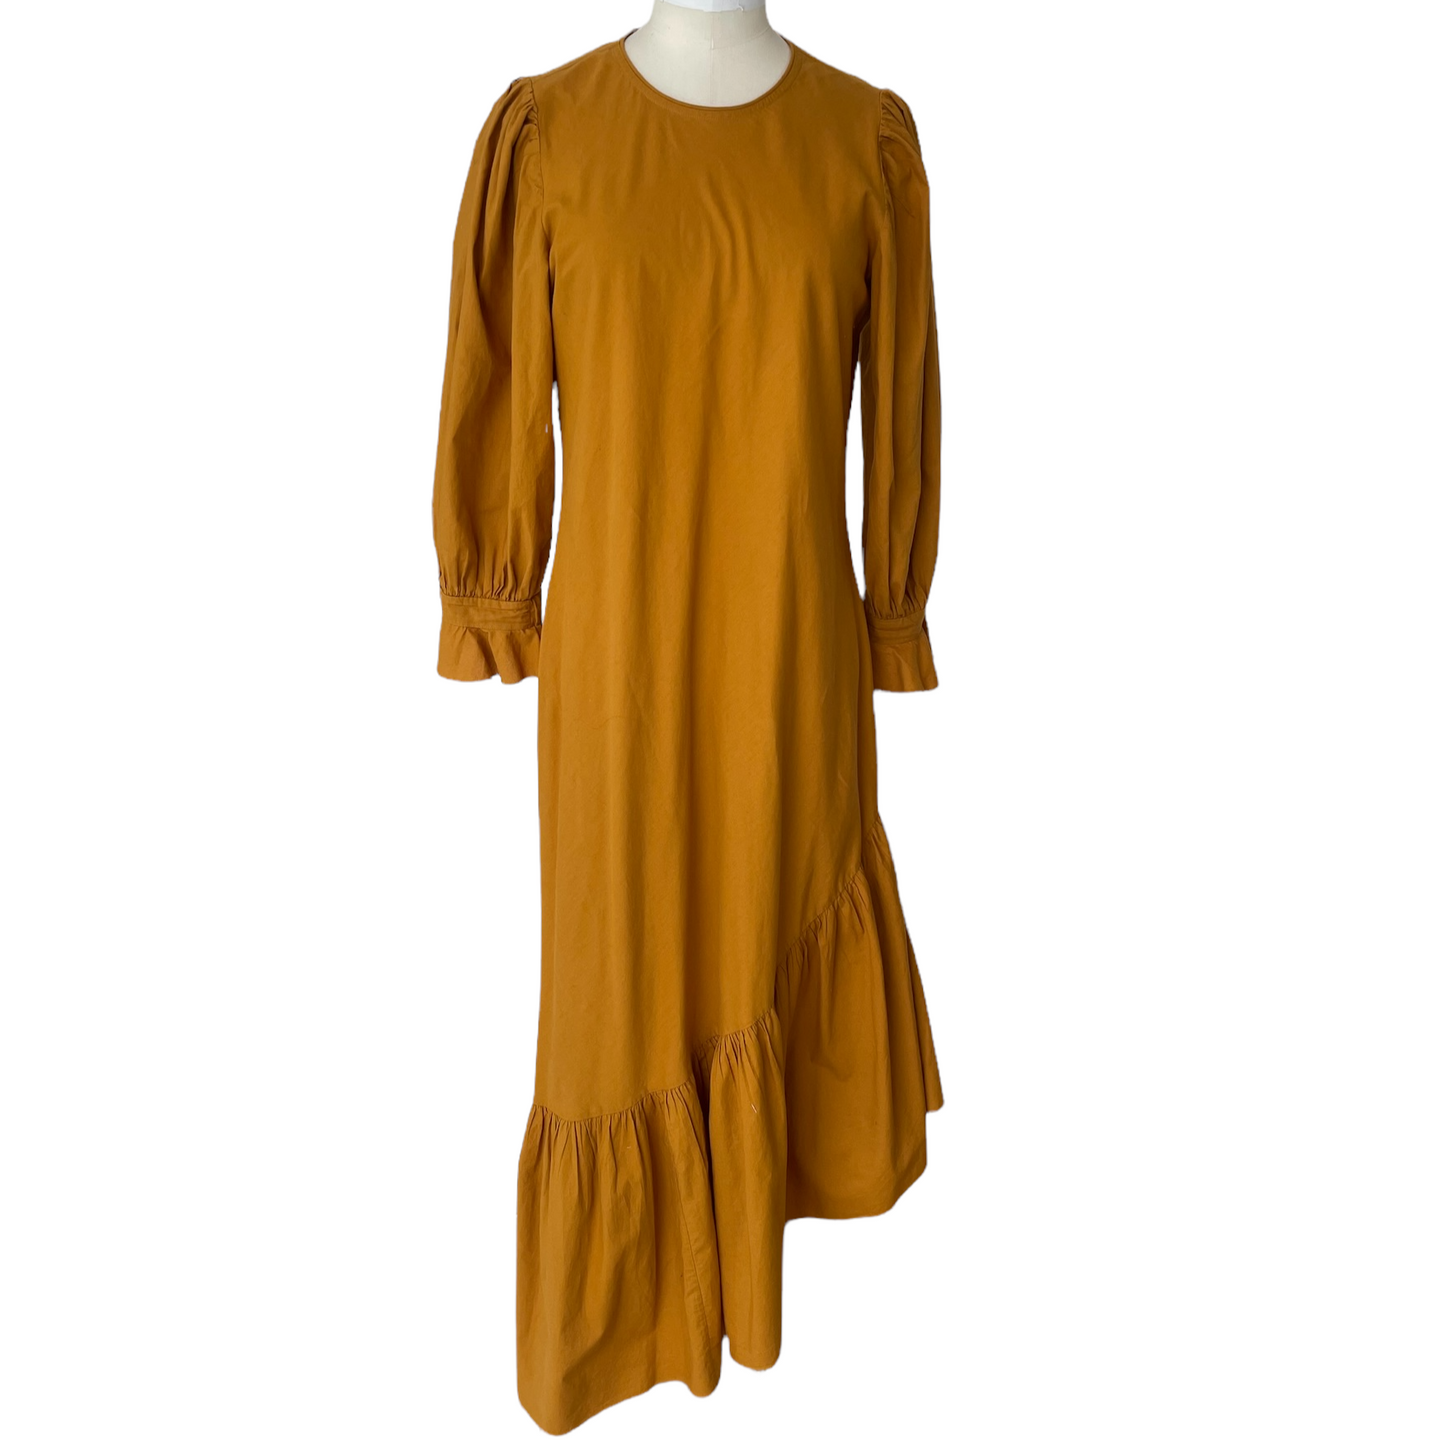 Mustard Cotton Dress - S